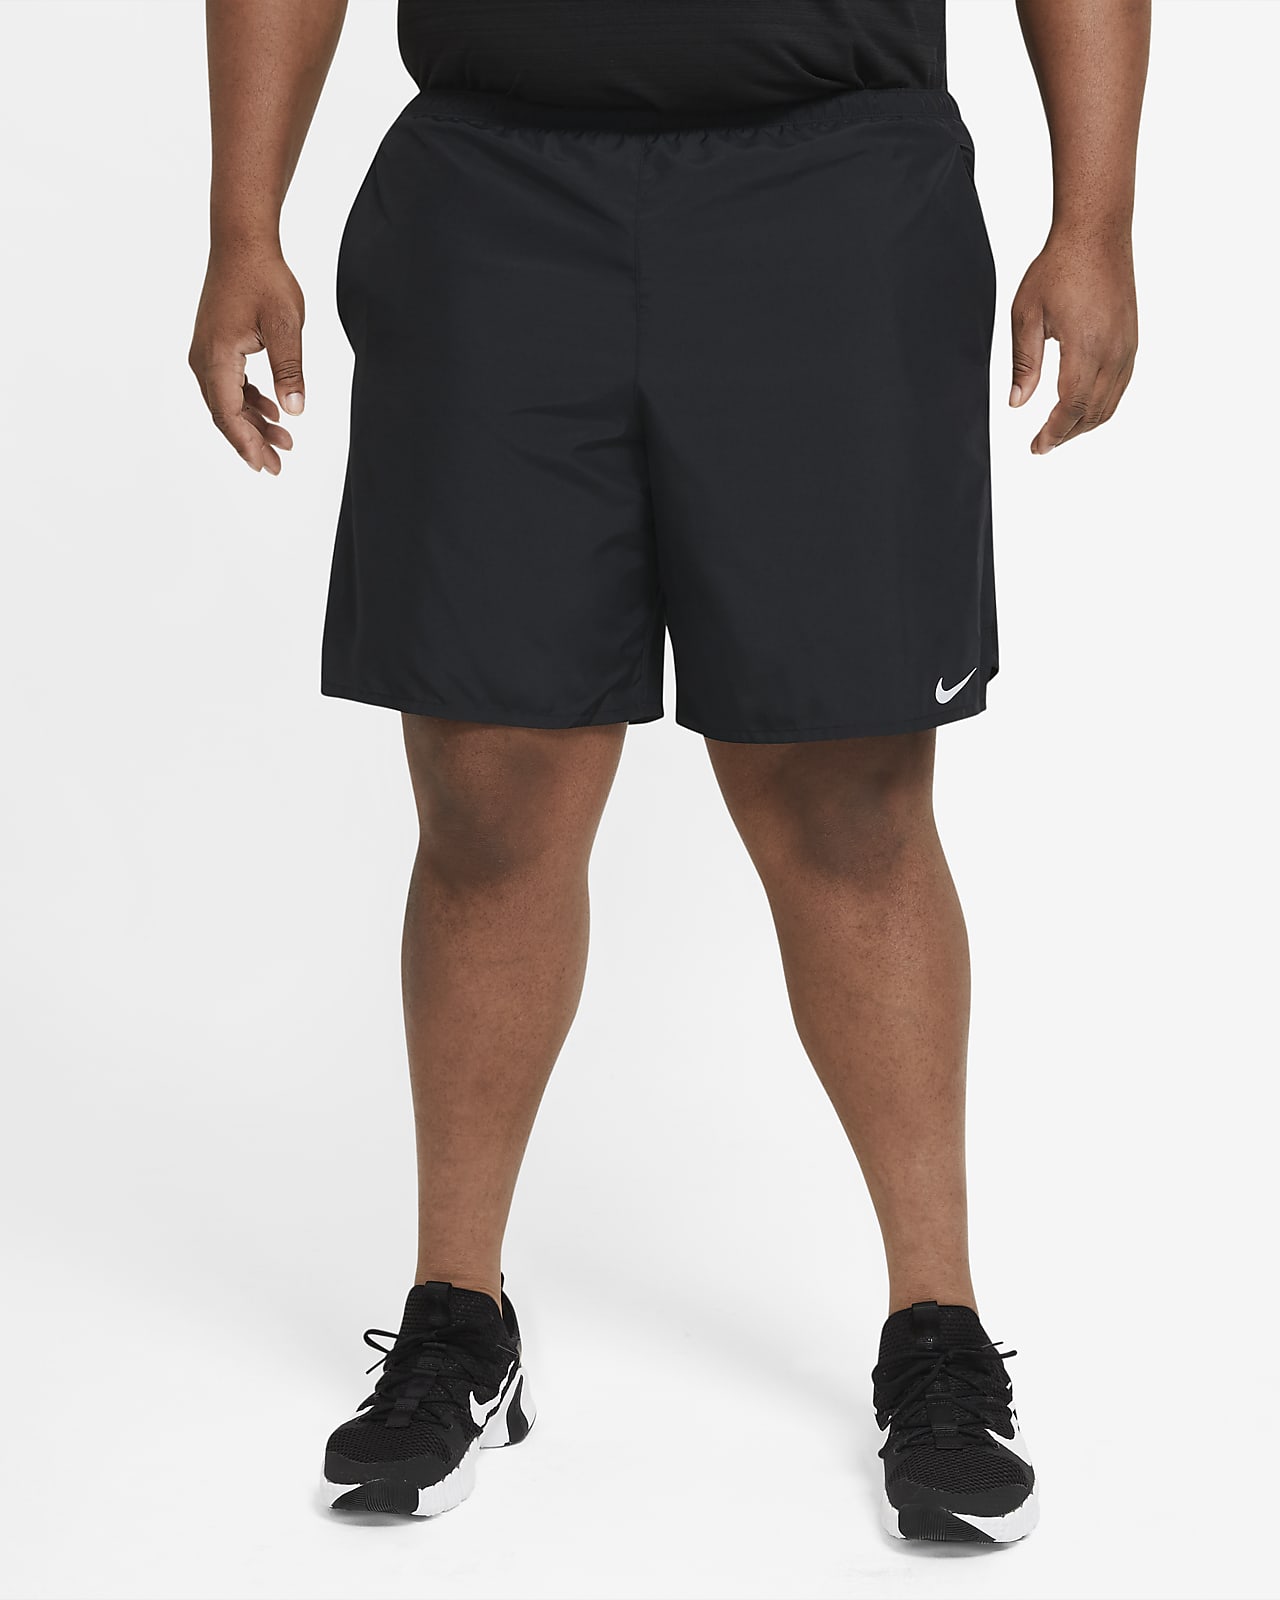 ruw Vleien Verwarren Nike Challenger Men's 18cm (approx.) Brief-Lined Running Shorts. Nike LU